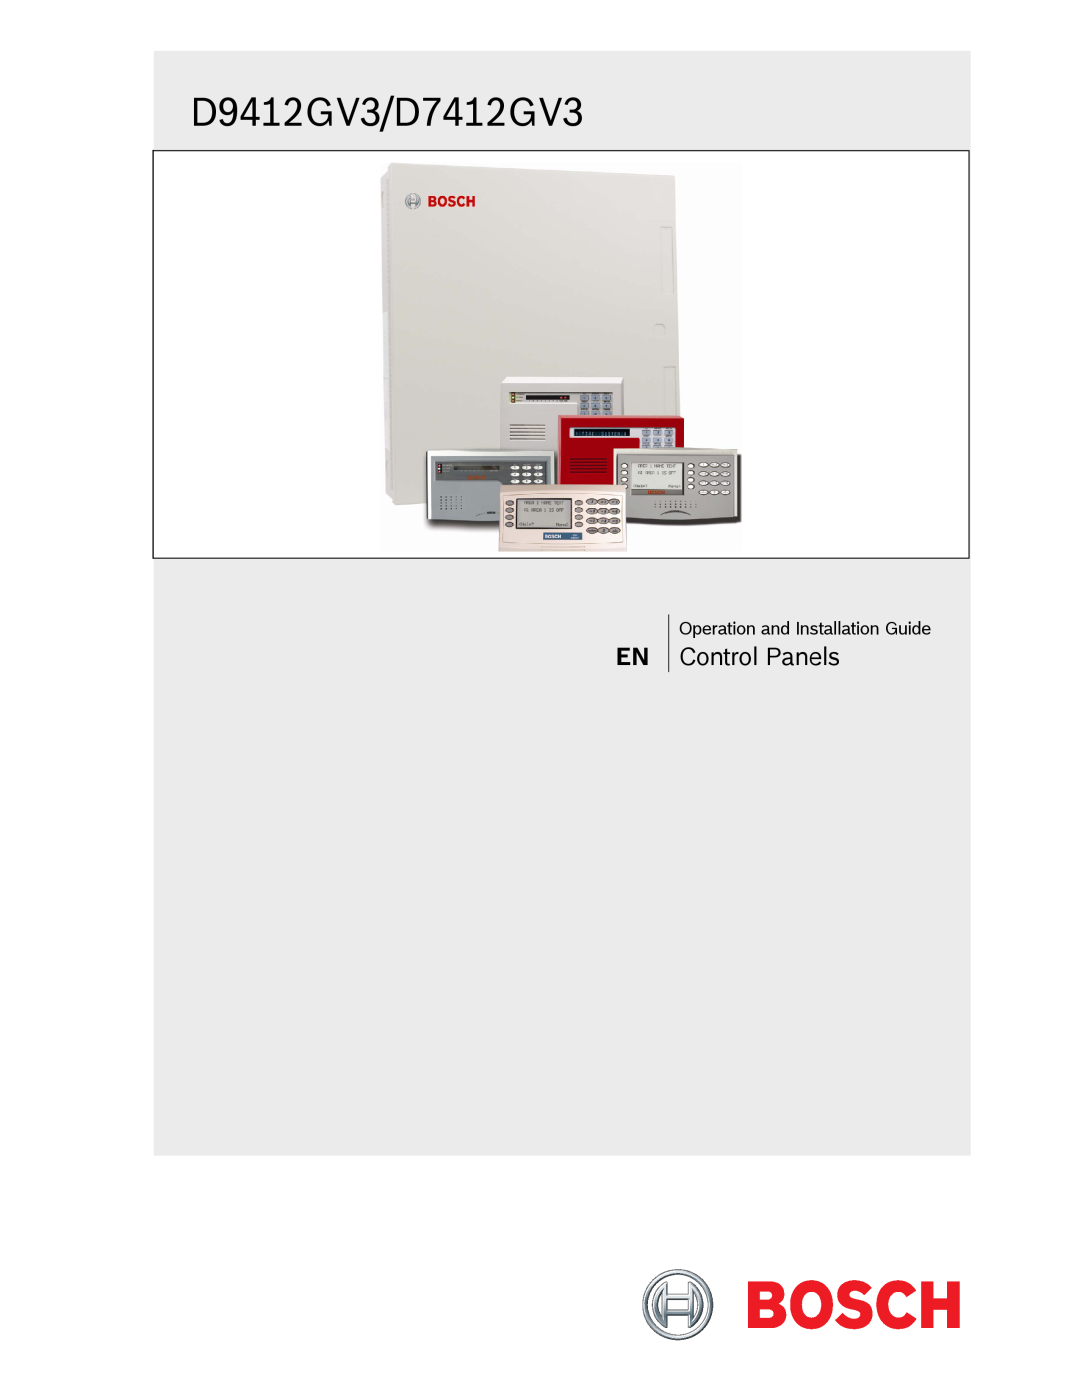 Bosch Appliances manual D9412GV3/D7412GV3, Control Panels 